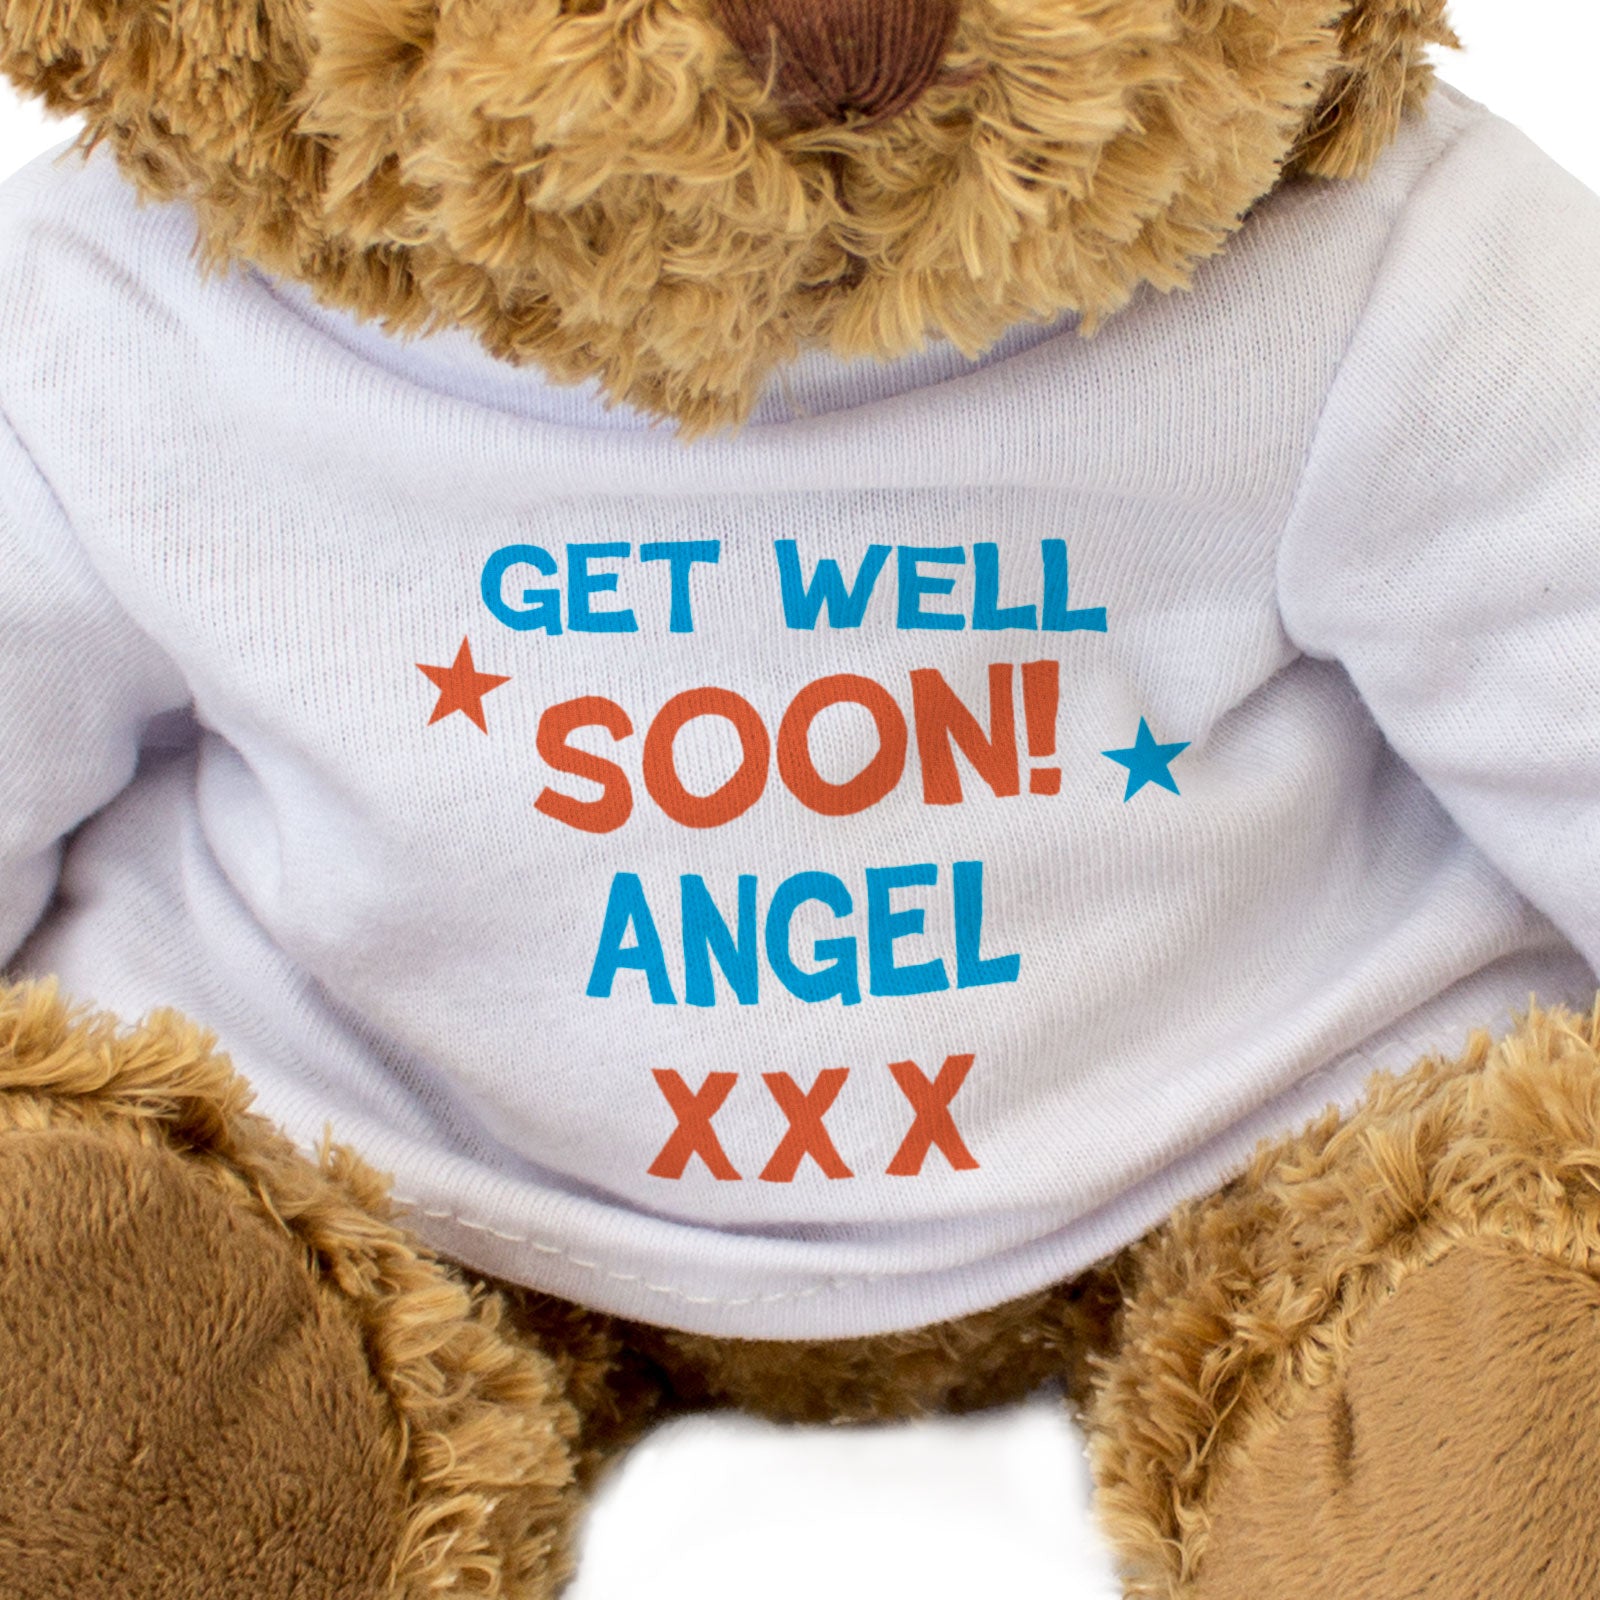 Get Well Soon Angel - Teddy Bear